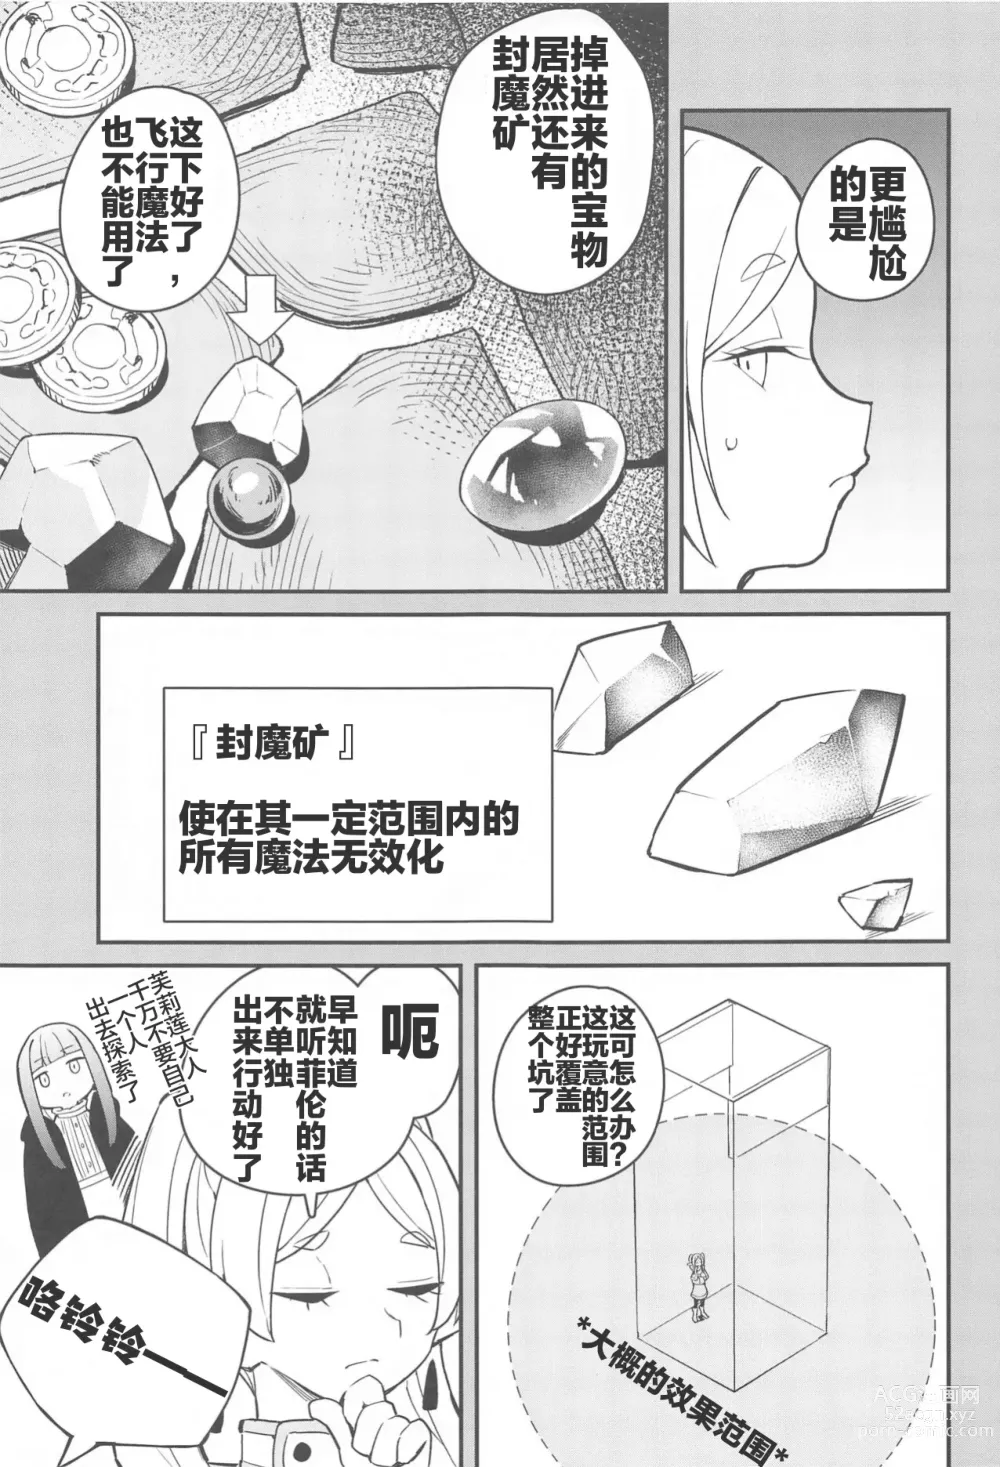 Page 5 of doujinshi 逃出深坑陷阱